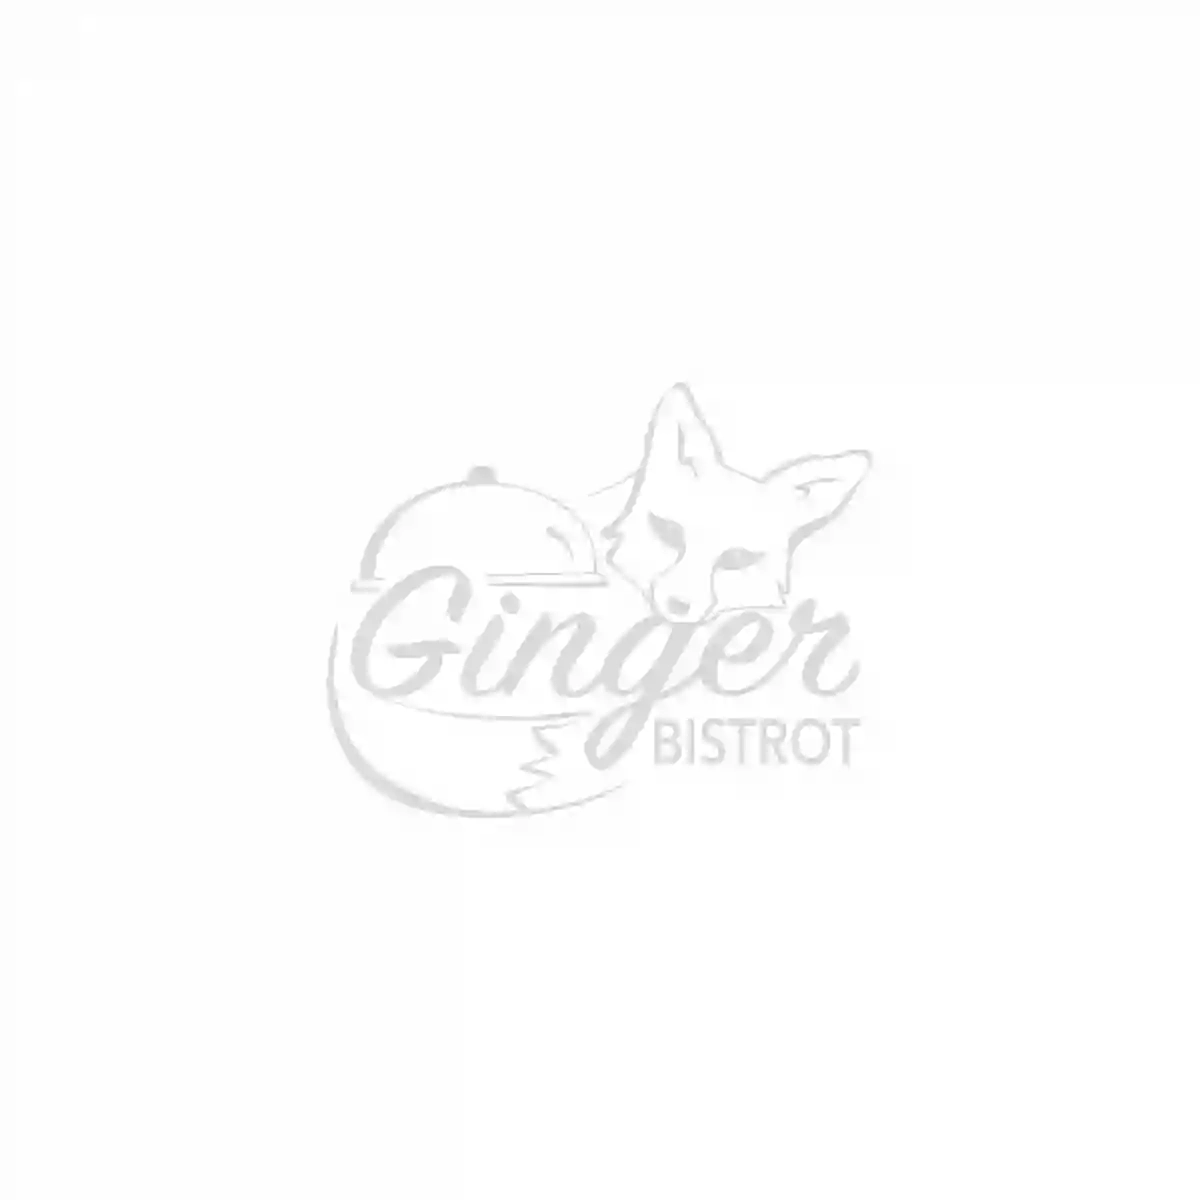 Ginger Bistrot | Ristorante Vineria Bar Santa Caterina Valfurva | Servizio da Asporto (Take Away)